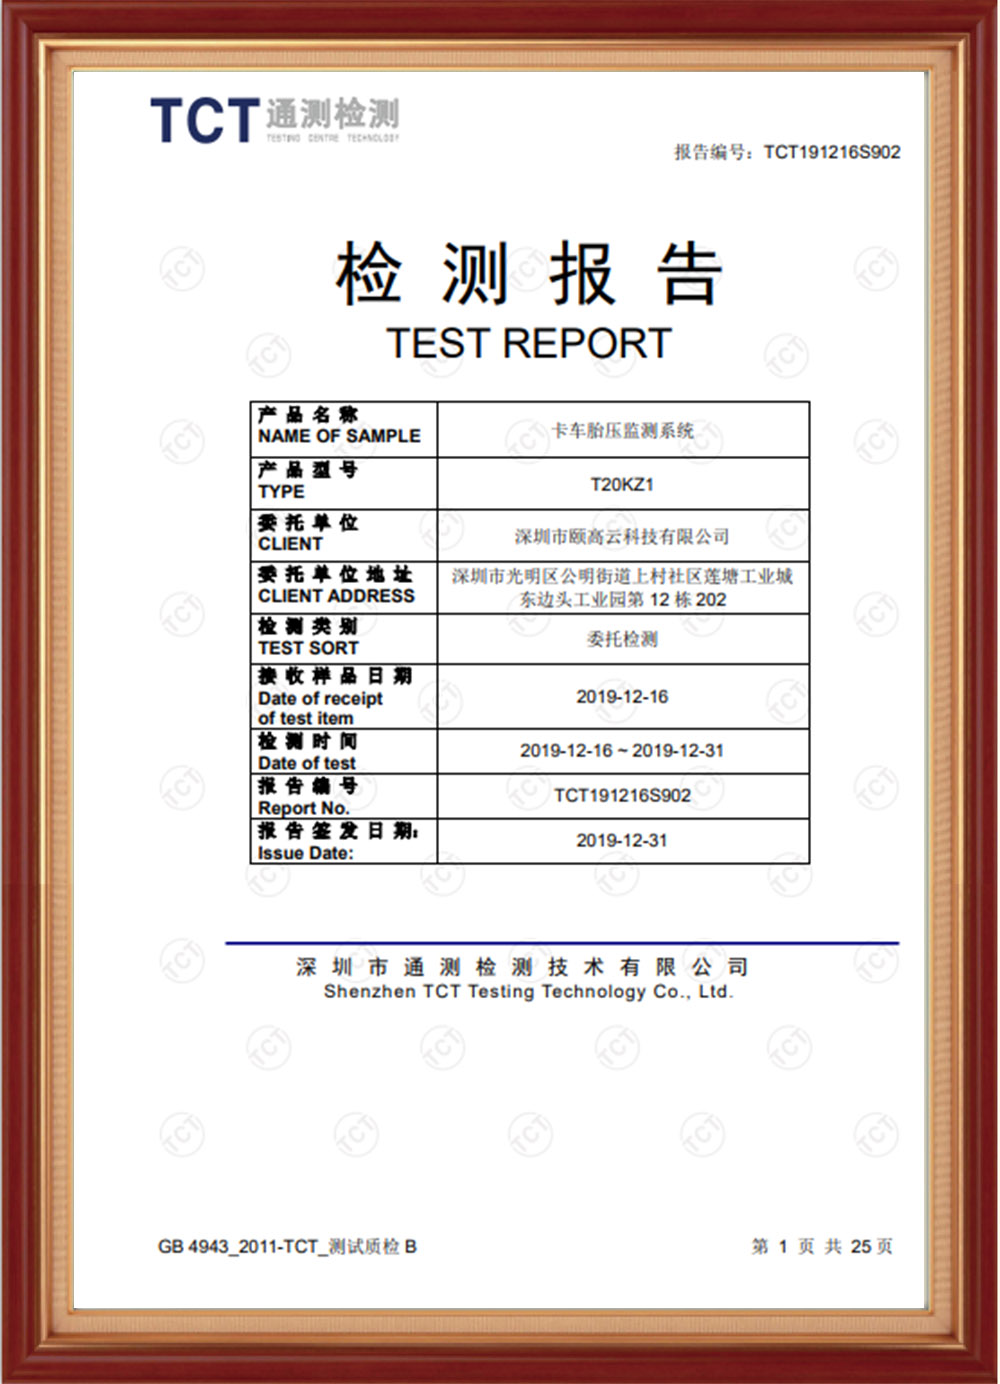 сертификат-01 (5)